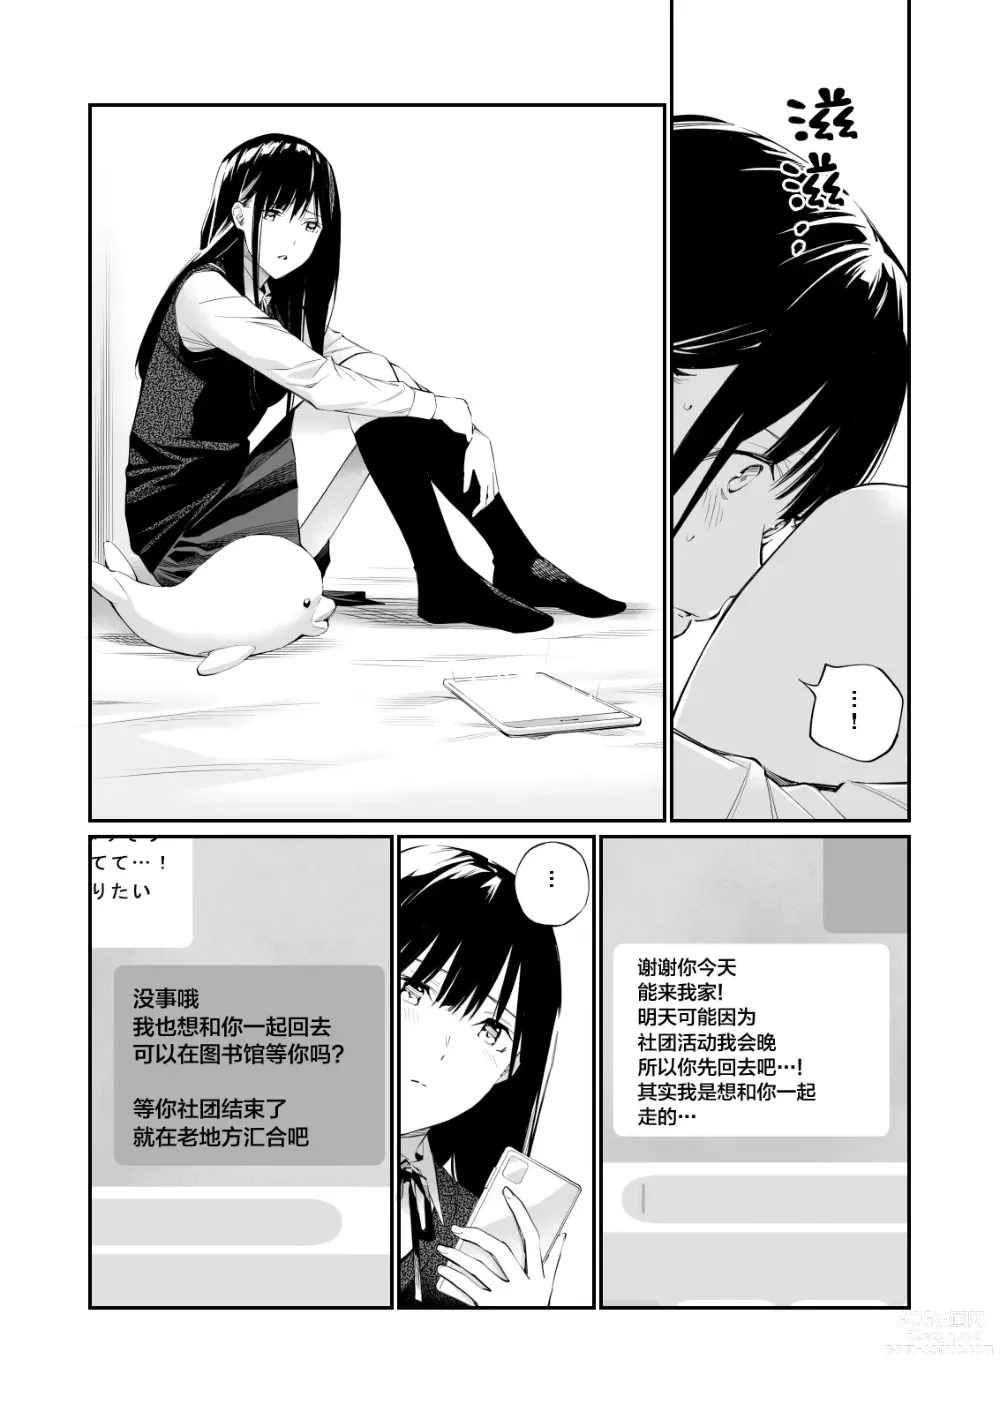 Page 24 of doujinshi 放入他所不知道的秘密。